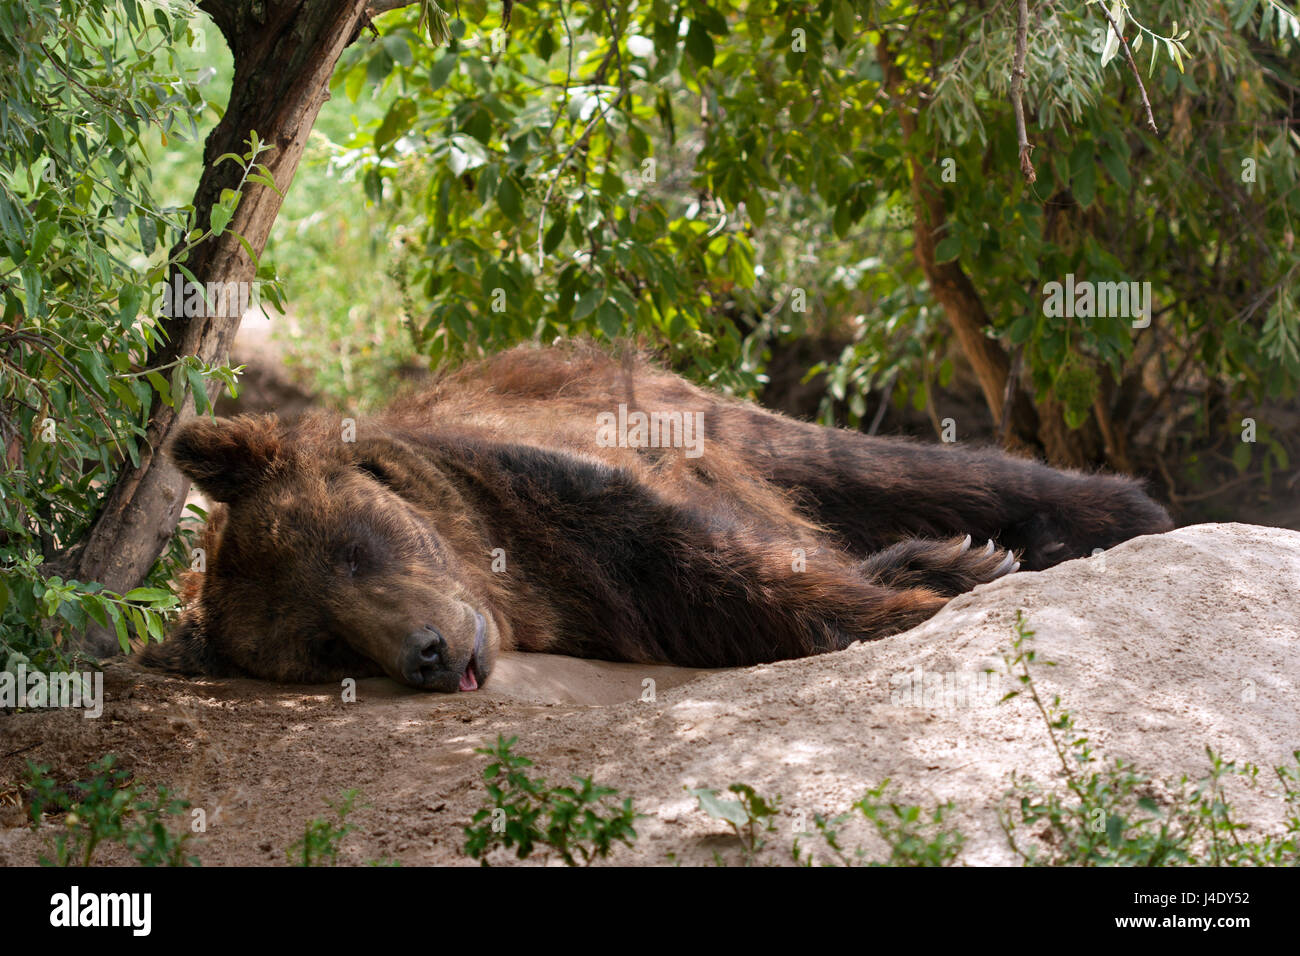 Brown bear sleeping in the shadow of trees at Bear farm, Veresegyháza, Hungary. Stock Photo